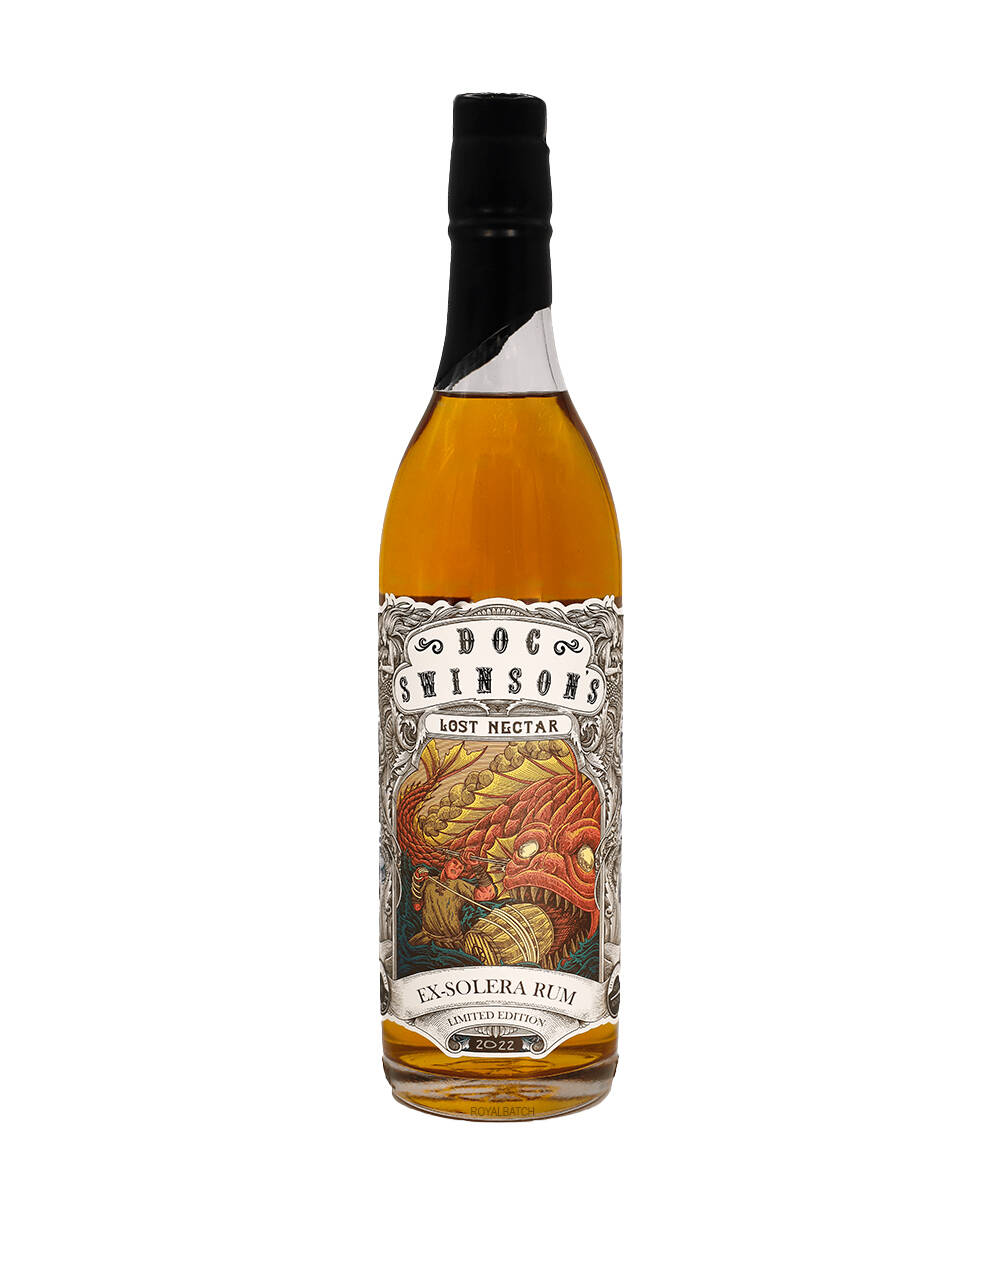 Doc Swinsons Lost Nectar Ex Solera Rum Limited Edition 2023